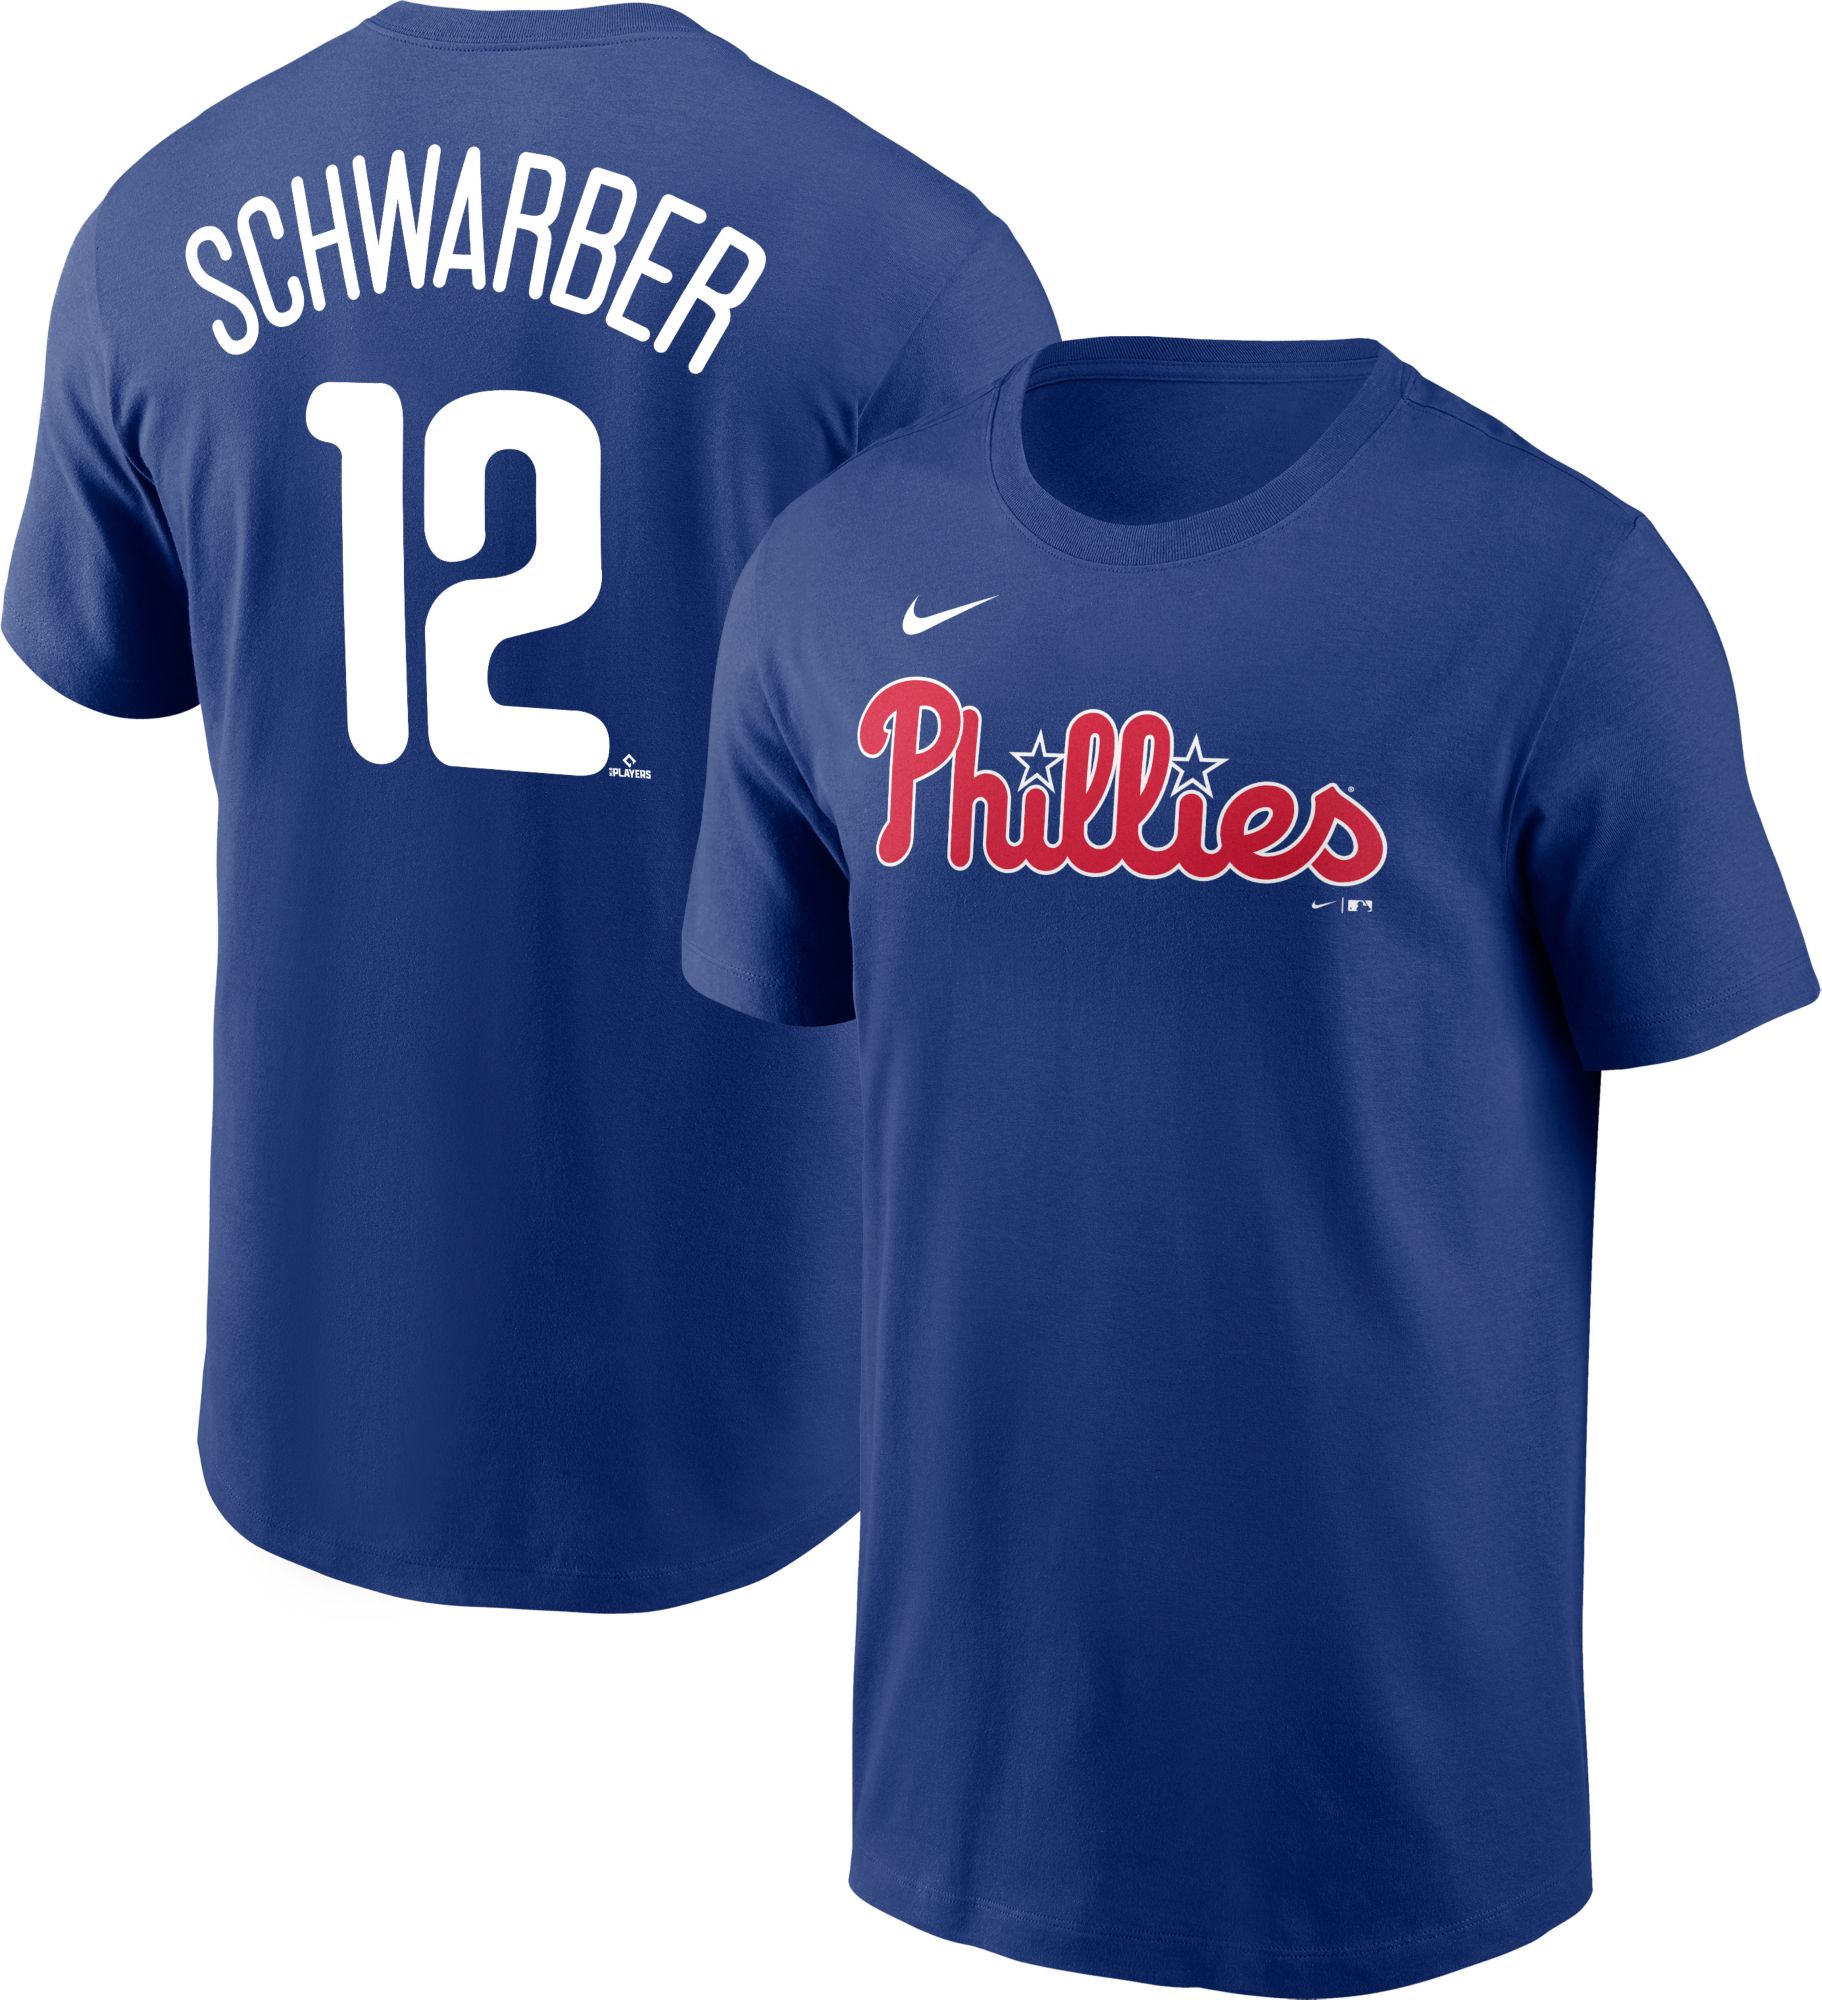 Kyle Schwarber Philadelphia Phillies Signed Replica Home Jersey